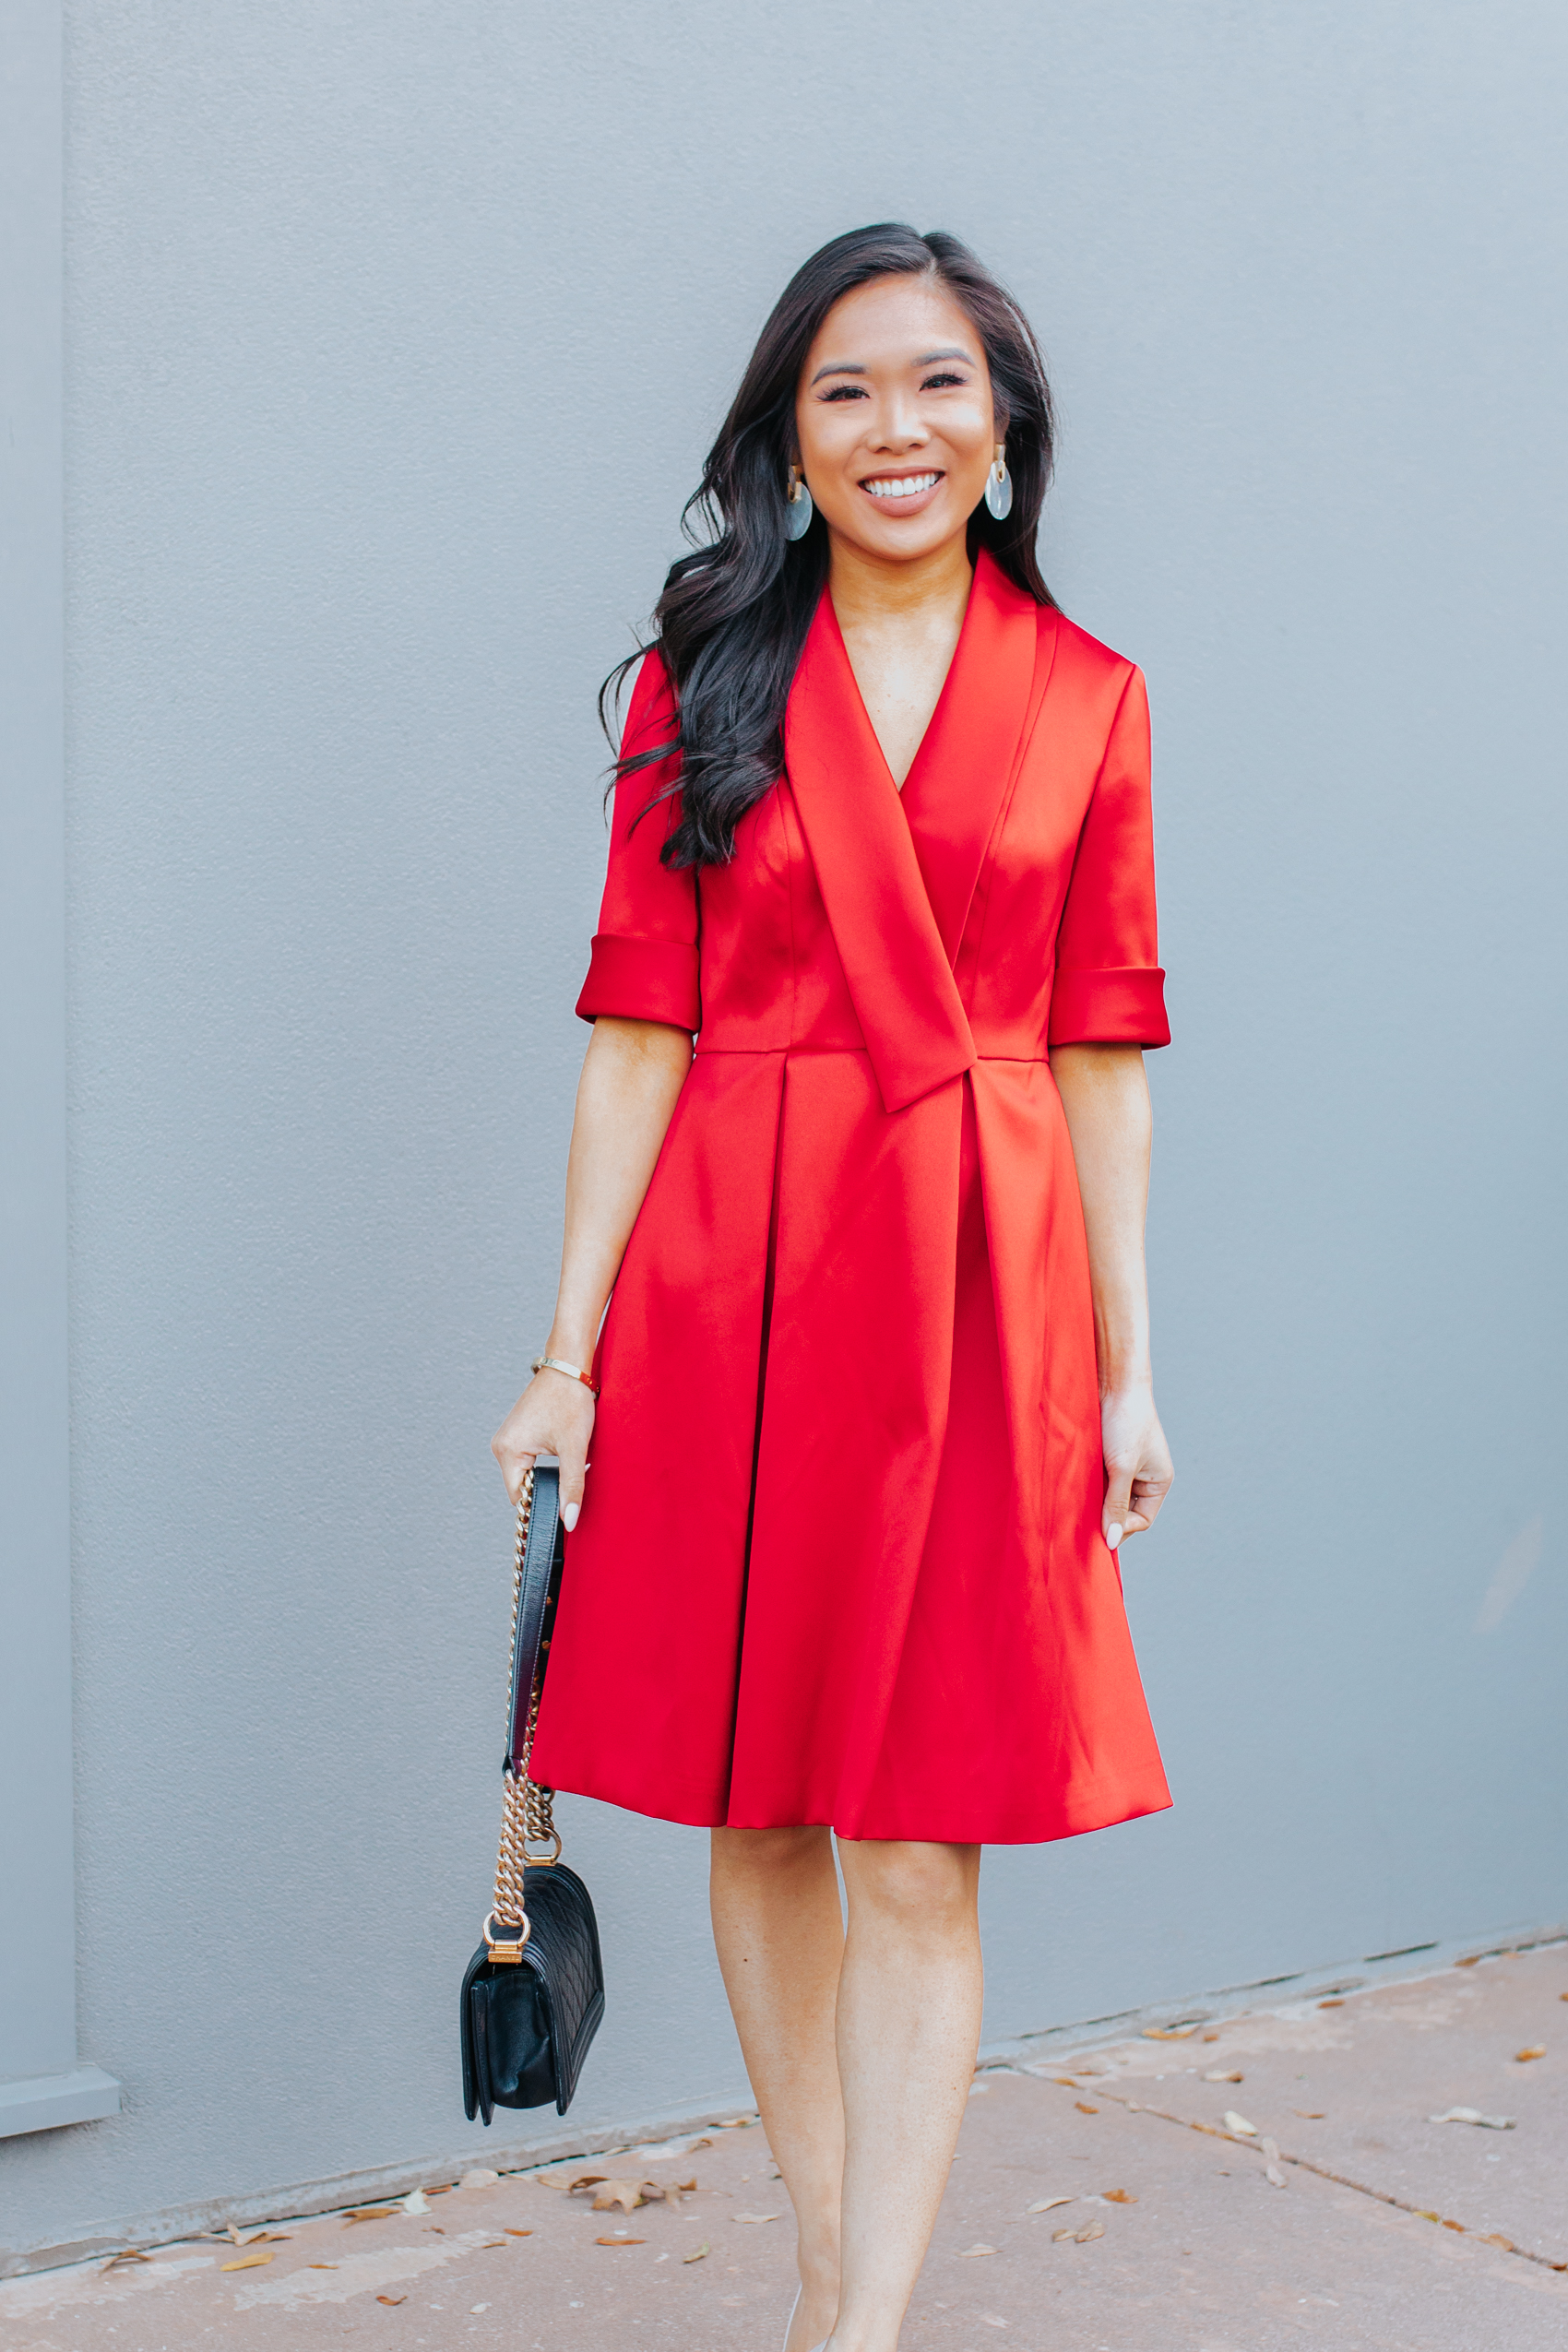 Blogger Hoang-Kim wears the Ruby Gal Meets Glam Dress and Kendra Scott Didi earrings